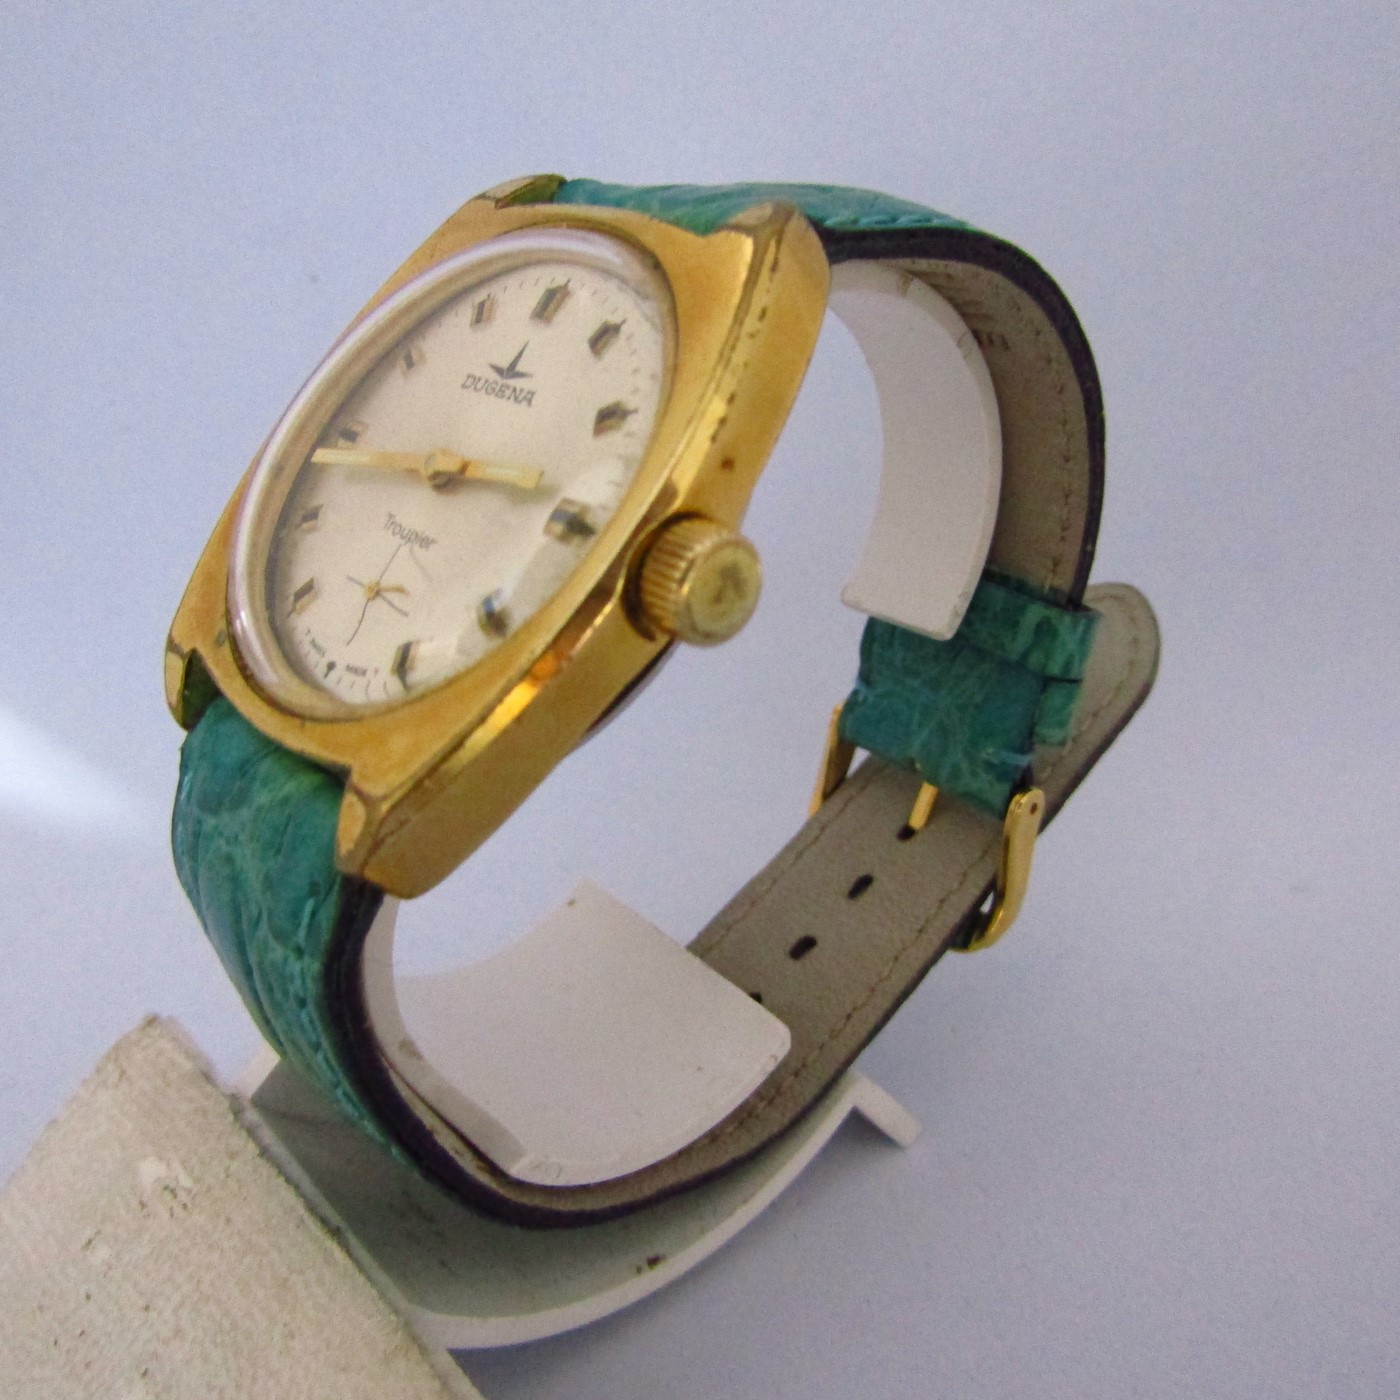 DUGENA TROUPIER. Reloj de pulsera para caballero. Suiza, ca. 1970